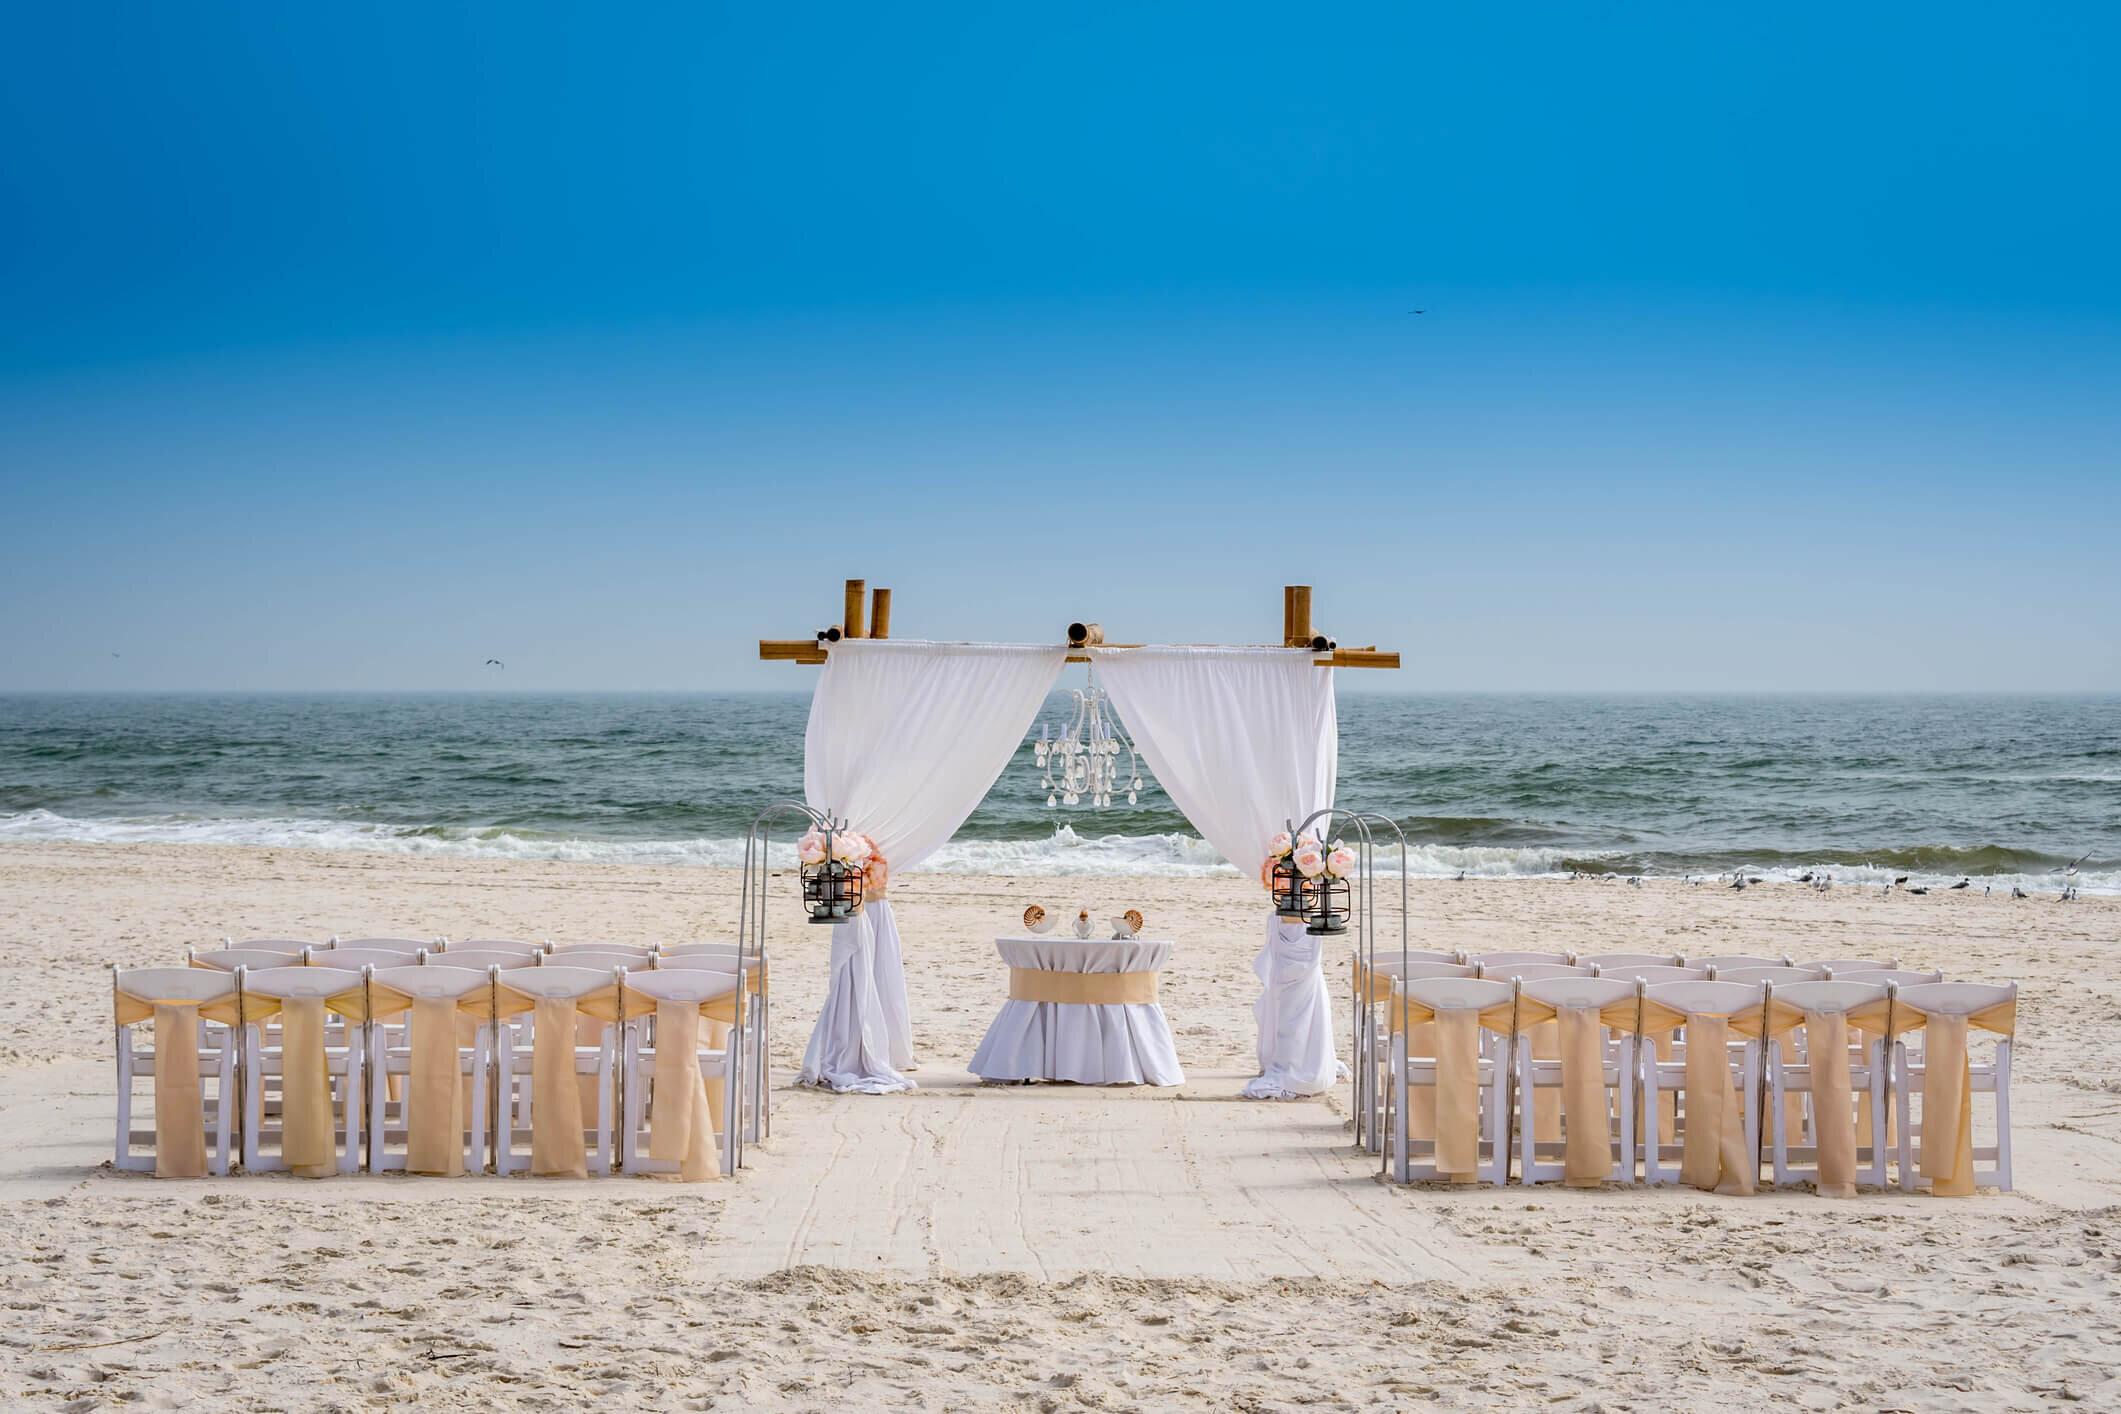 viceversa interval intestine beach wedding decor ideas se eschiva solar ...